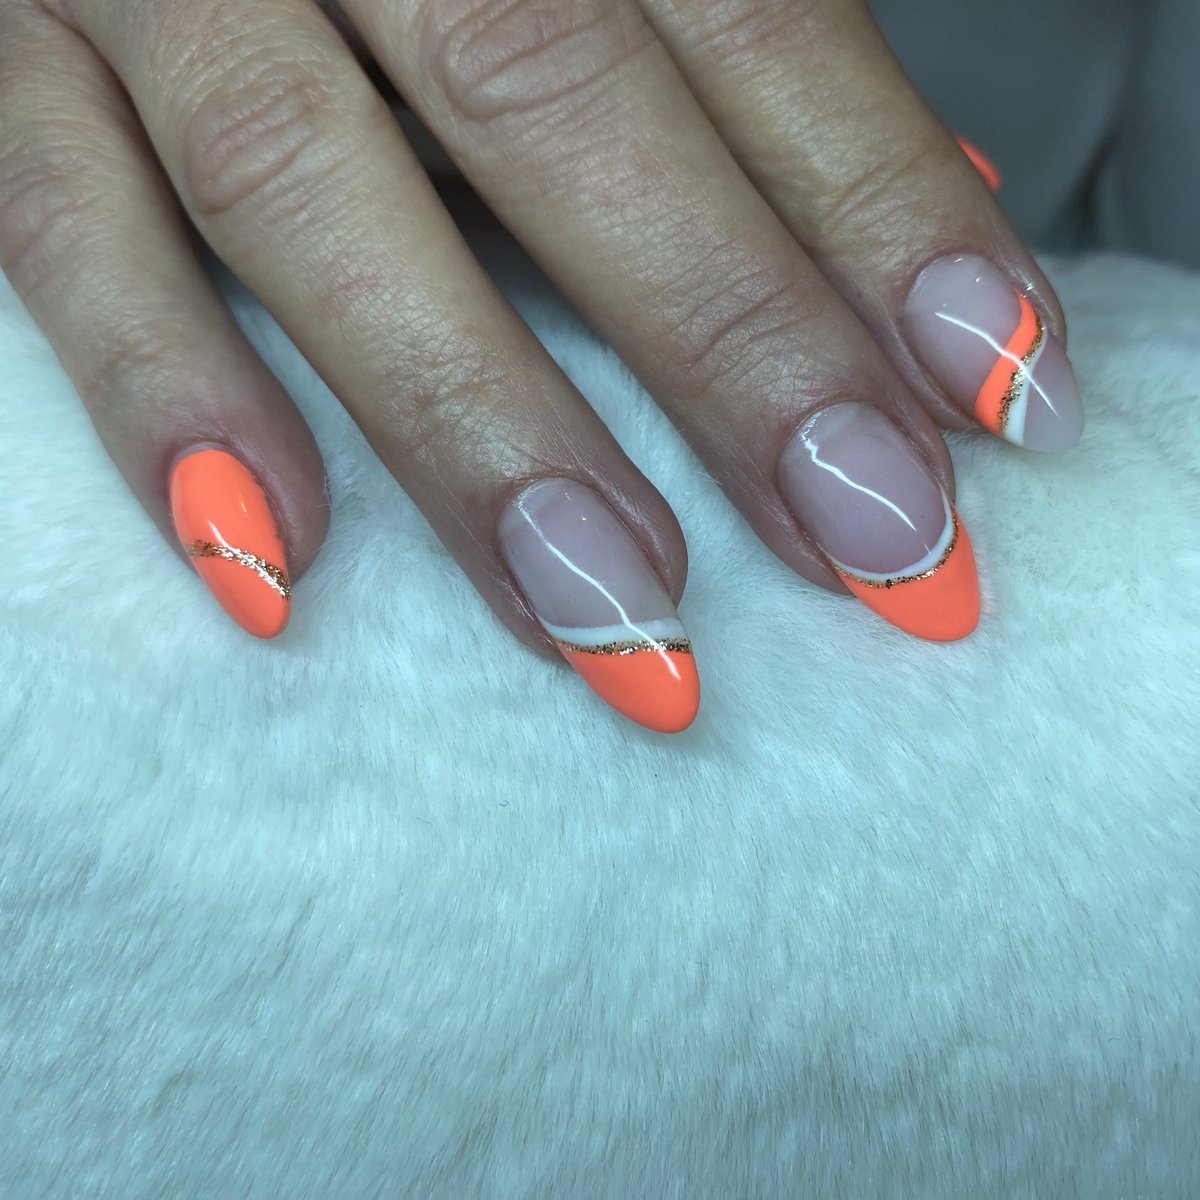 Orange Pop #naildesigns #madamglam #manicurednails #springnails #manicurenails #roundnails #summernails #goldnails #manicure #prettynails  #handpainted #frenchnails #nailart #gelpolish #nailsoftheday #nailswag #almondnails #nails #acrylicnails #shortnails  #orangenails